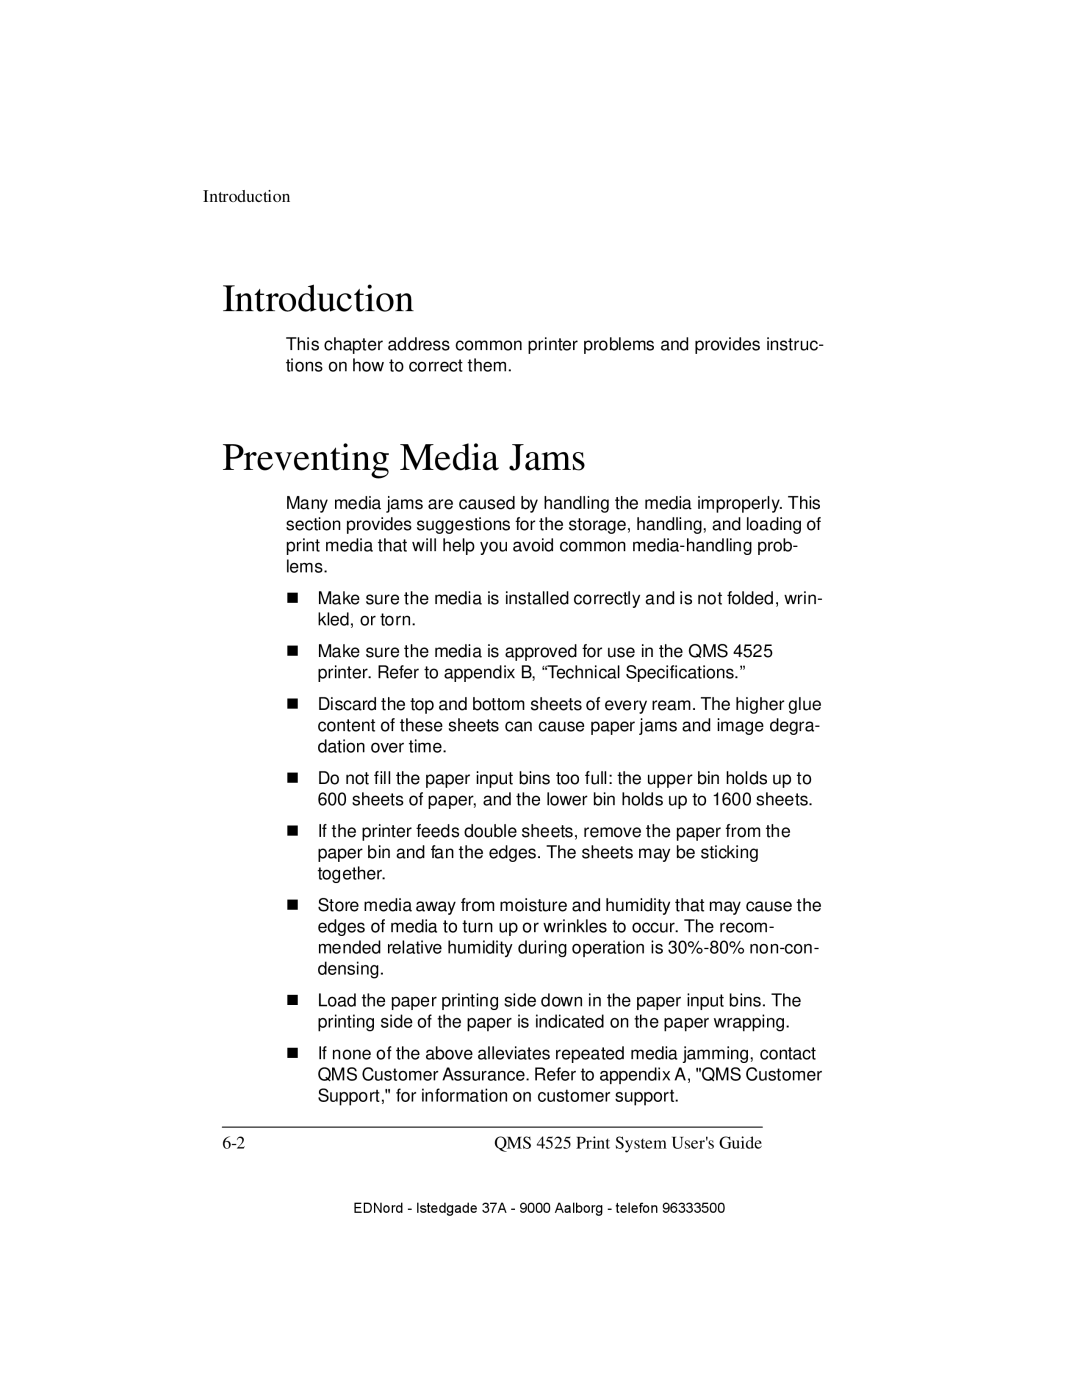 IBM QMS 4525 manual Preventing Media Jams, Introduction 